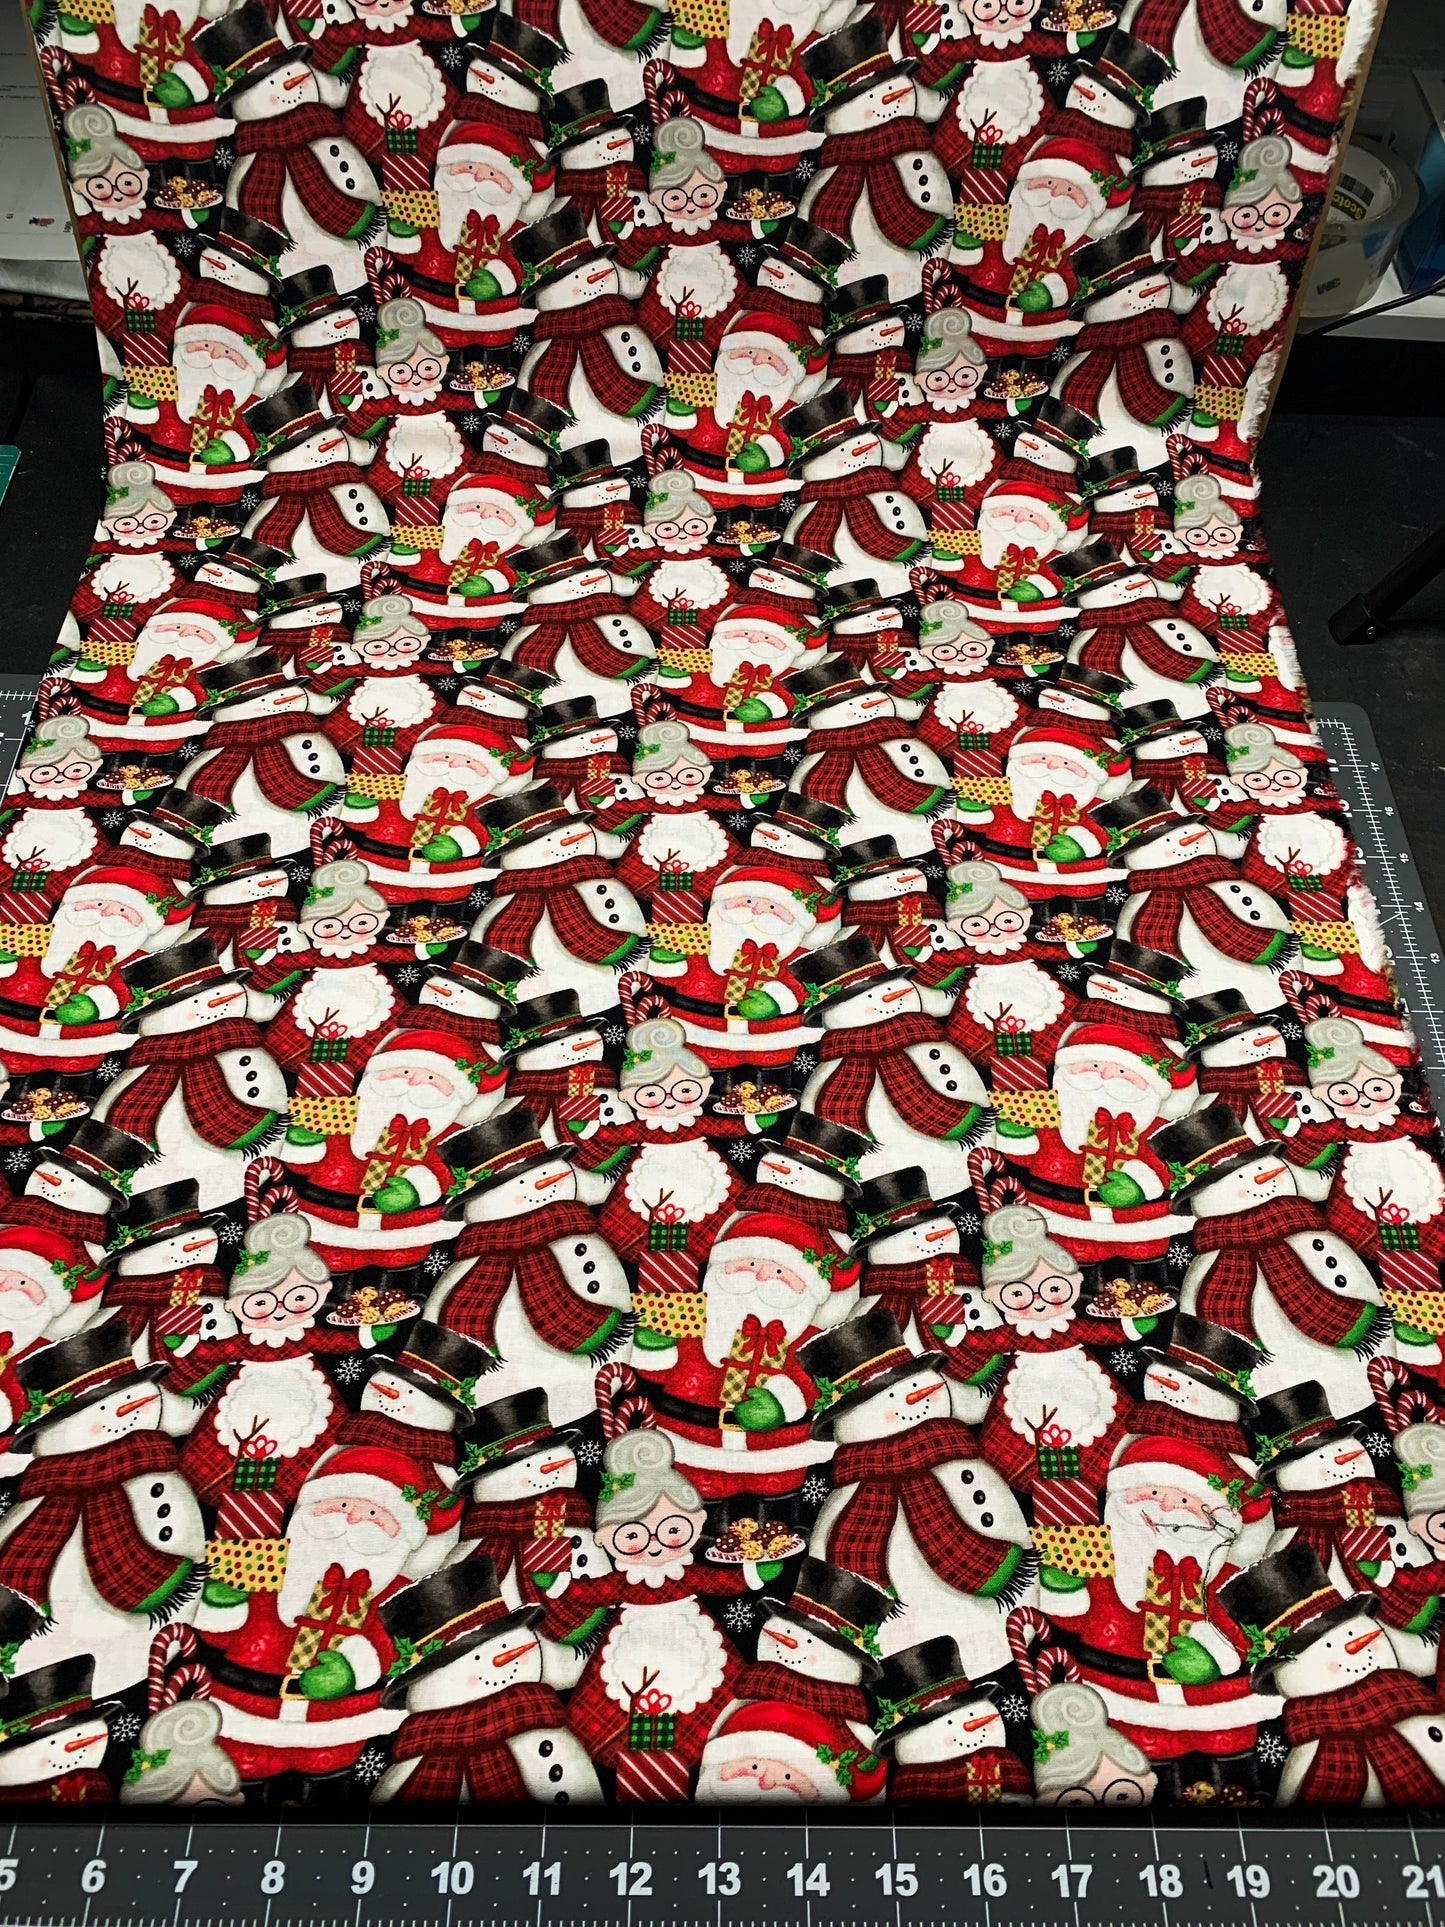 Merry Town Snowman Christmas fabric 6361-89 Santa